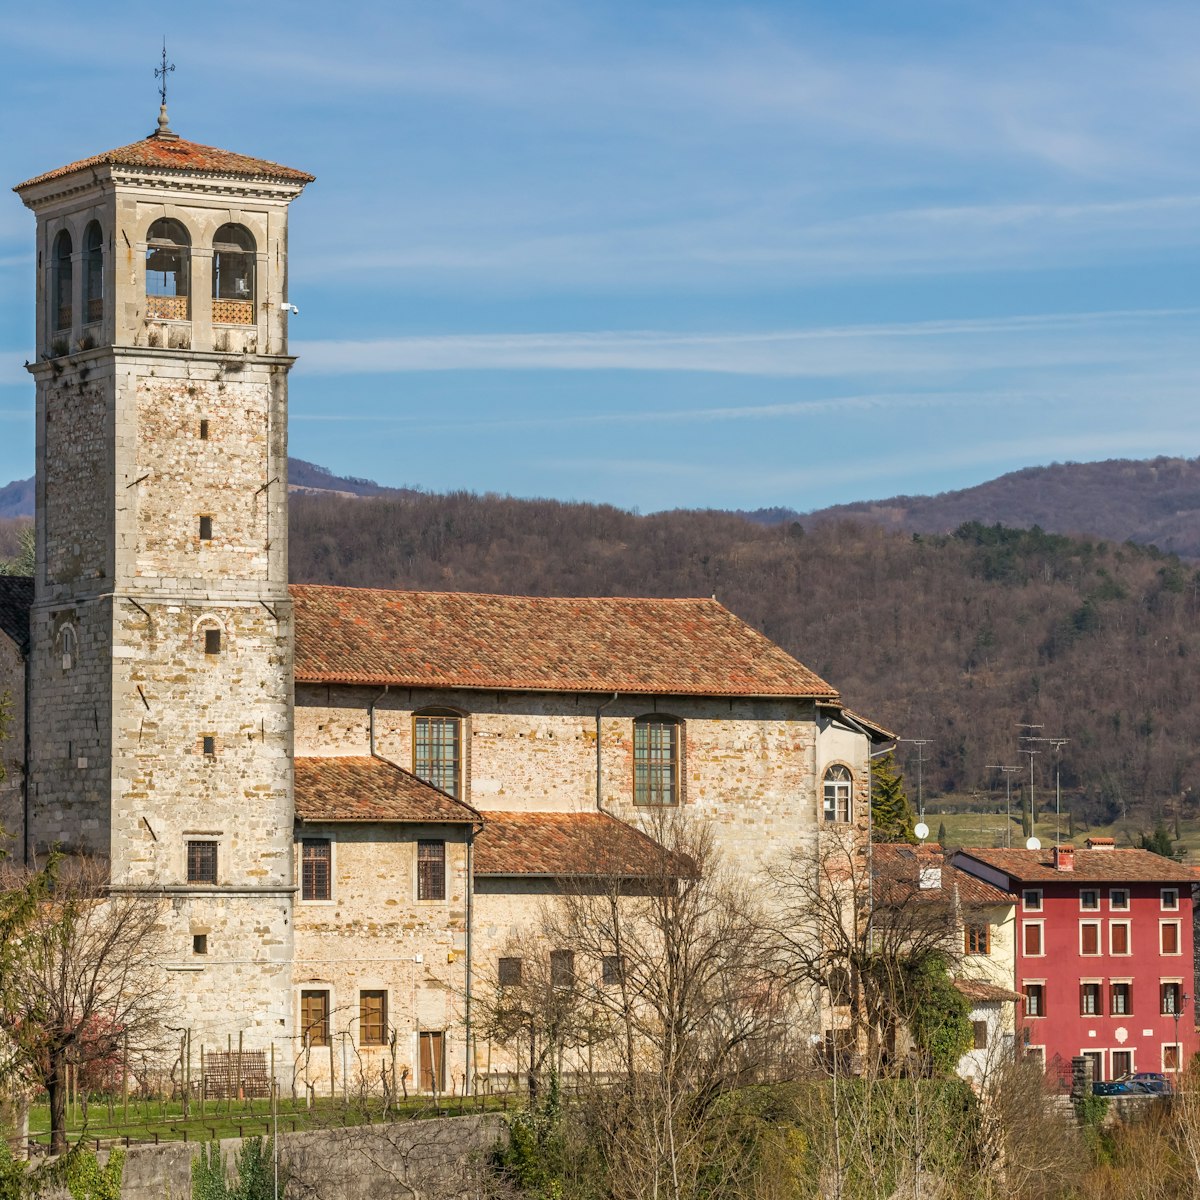 The church Oratorio di Santa Maria in Valle, also known as Lombard Temple, in the city of Cividale del Friuli in Northern Italy.